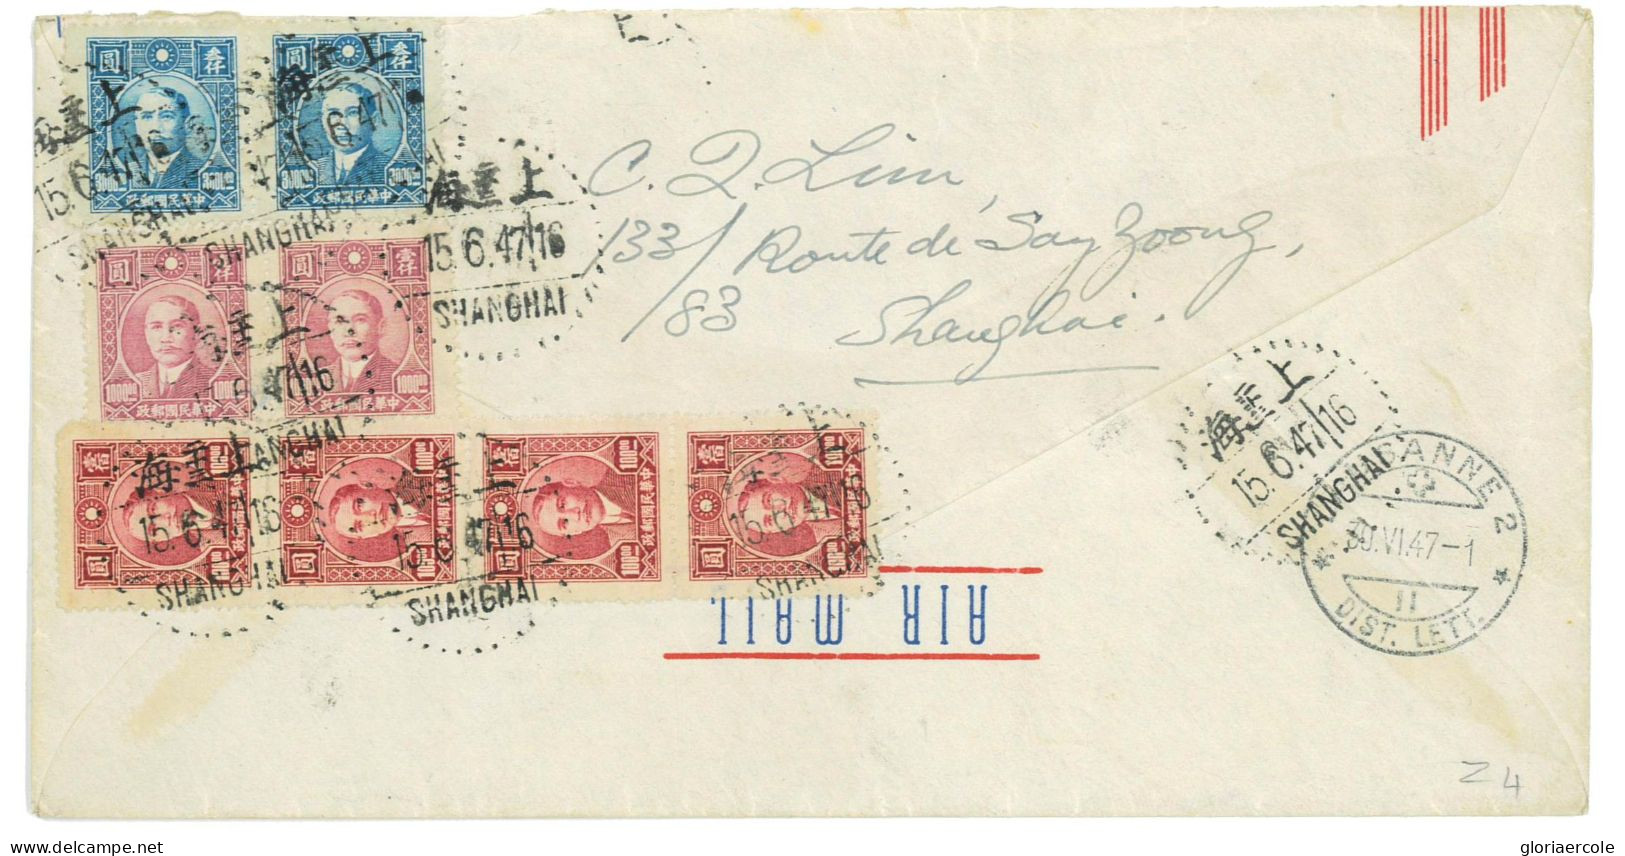 P2936 -CHINA , REGISTRED LETTER FROM SHANGAI TO SWITZERLAND, 1947 $ 8400 FRANKING. - 1912-1949 Republiek